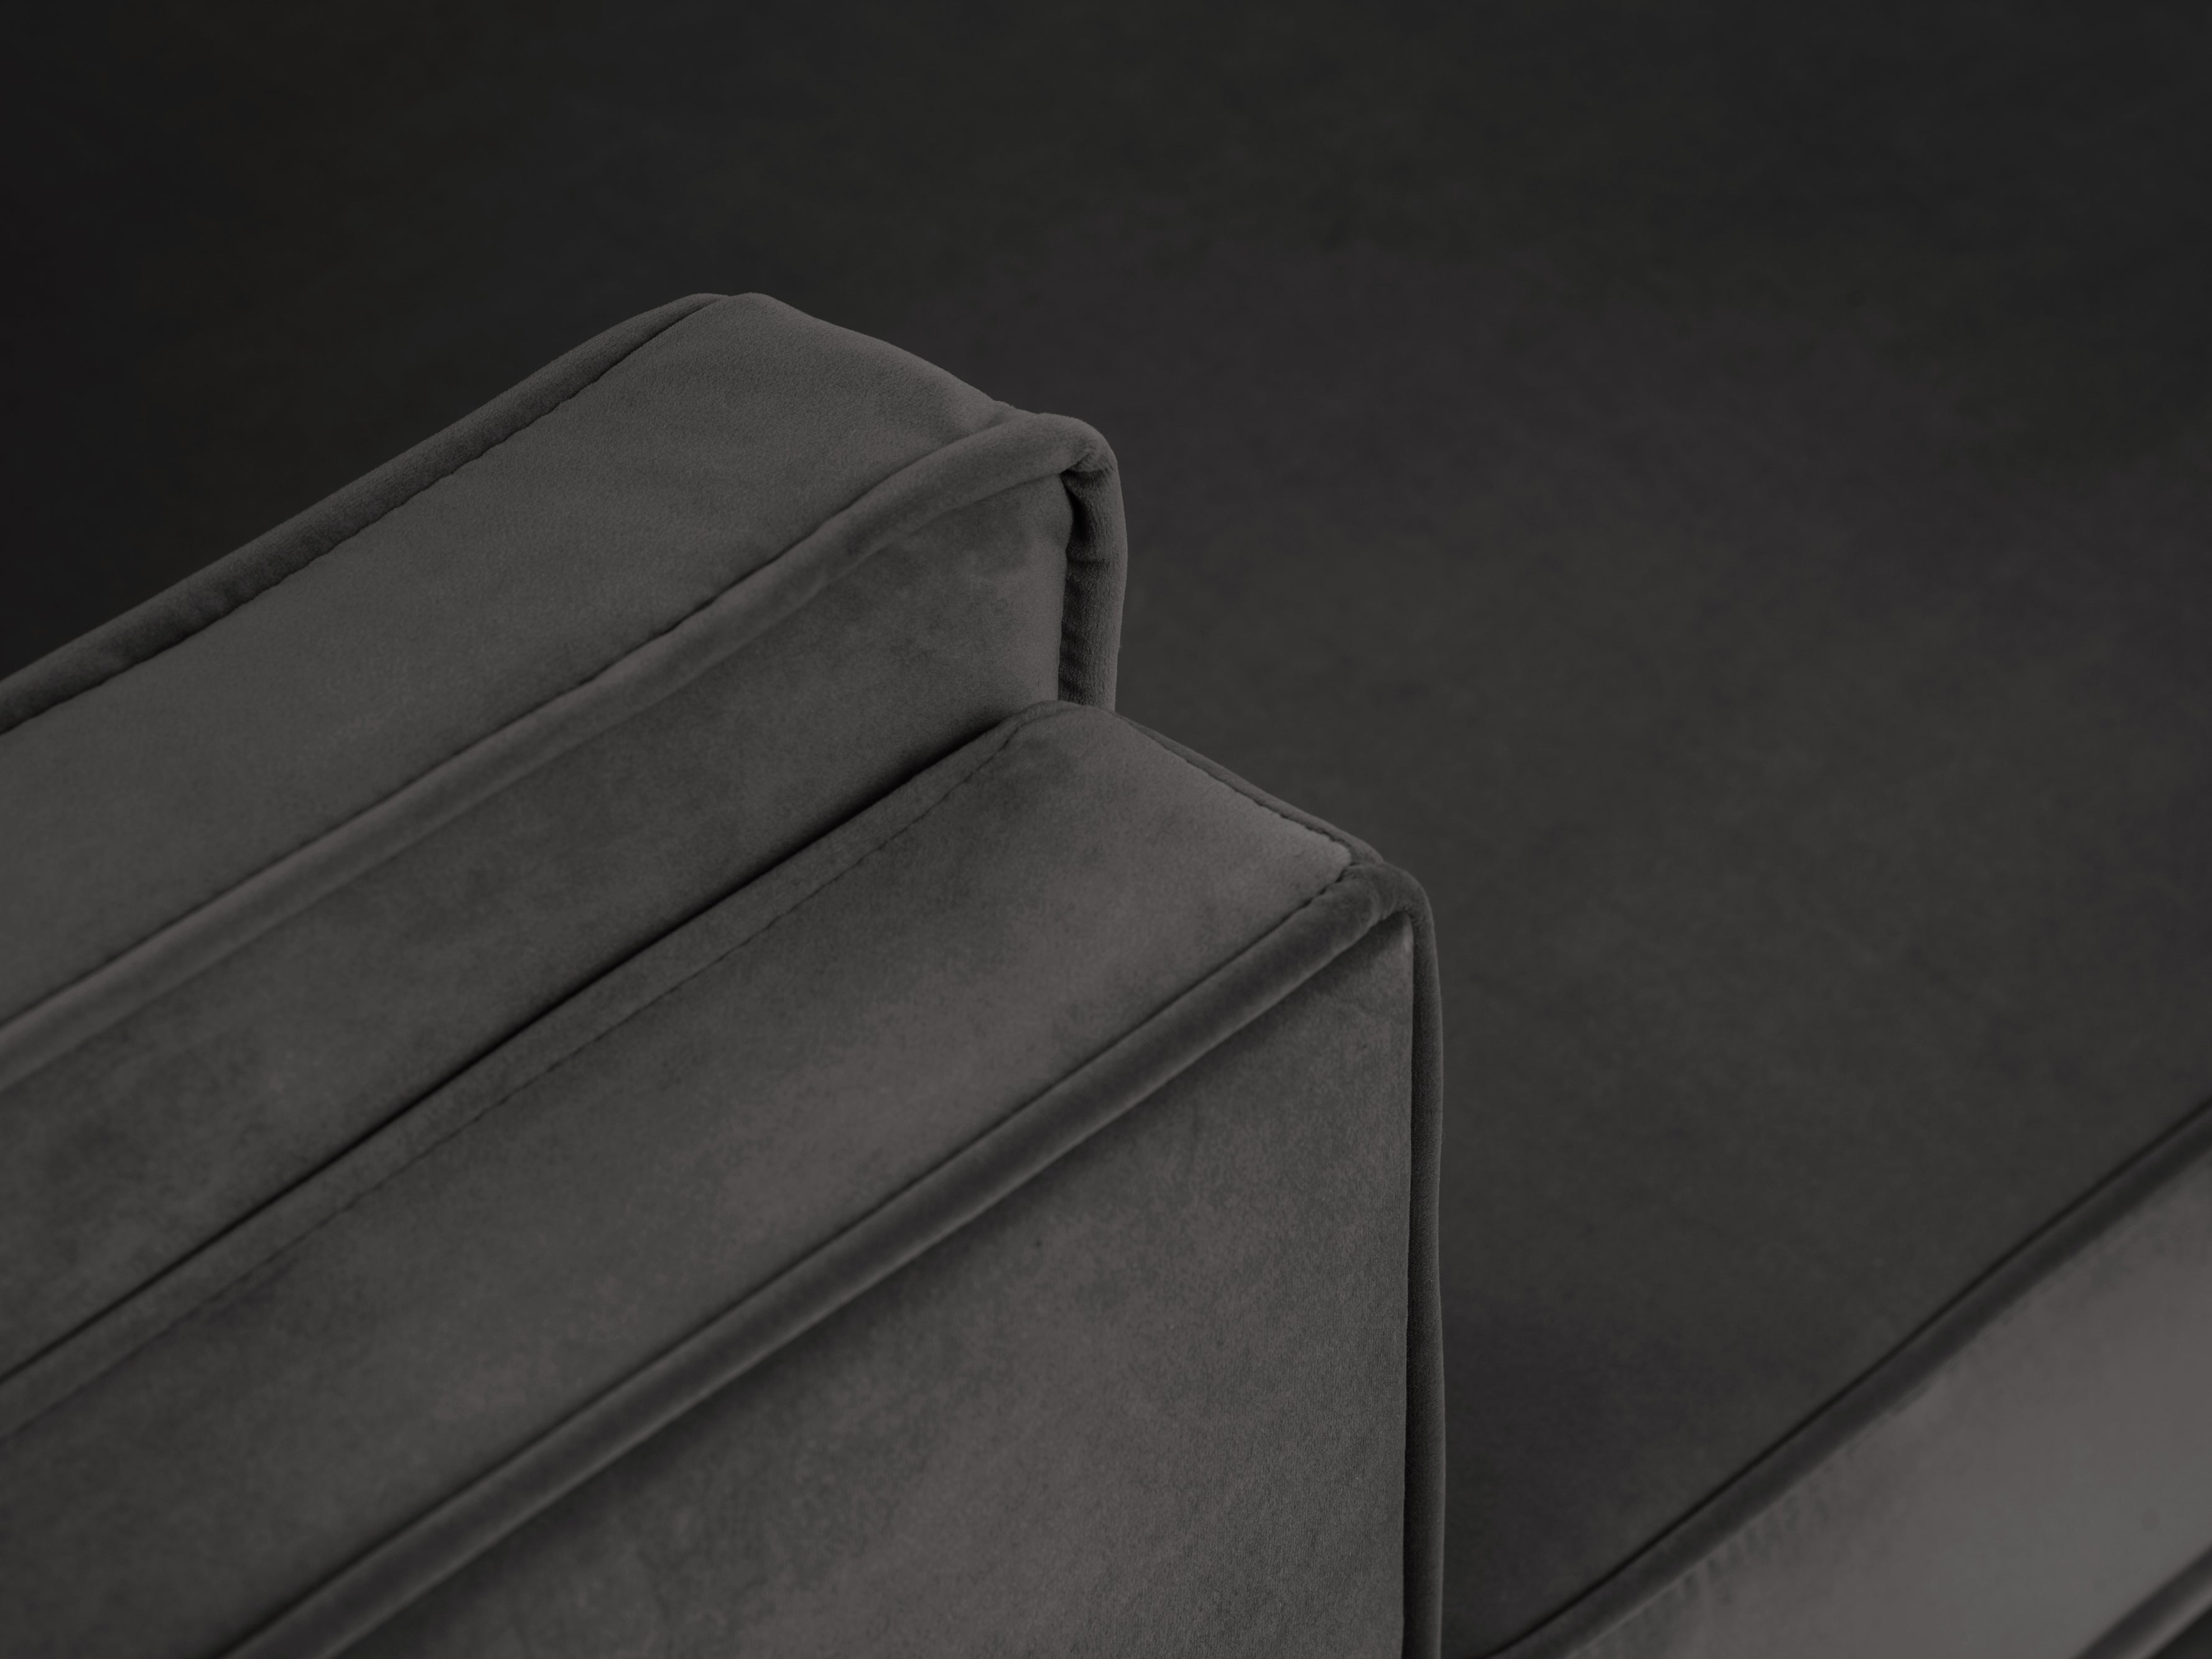 LUIS dark grey velvet left-hand corner sofa with gold base